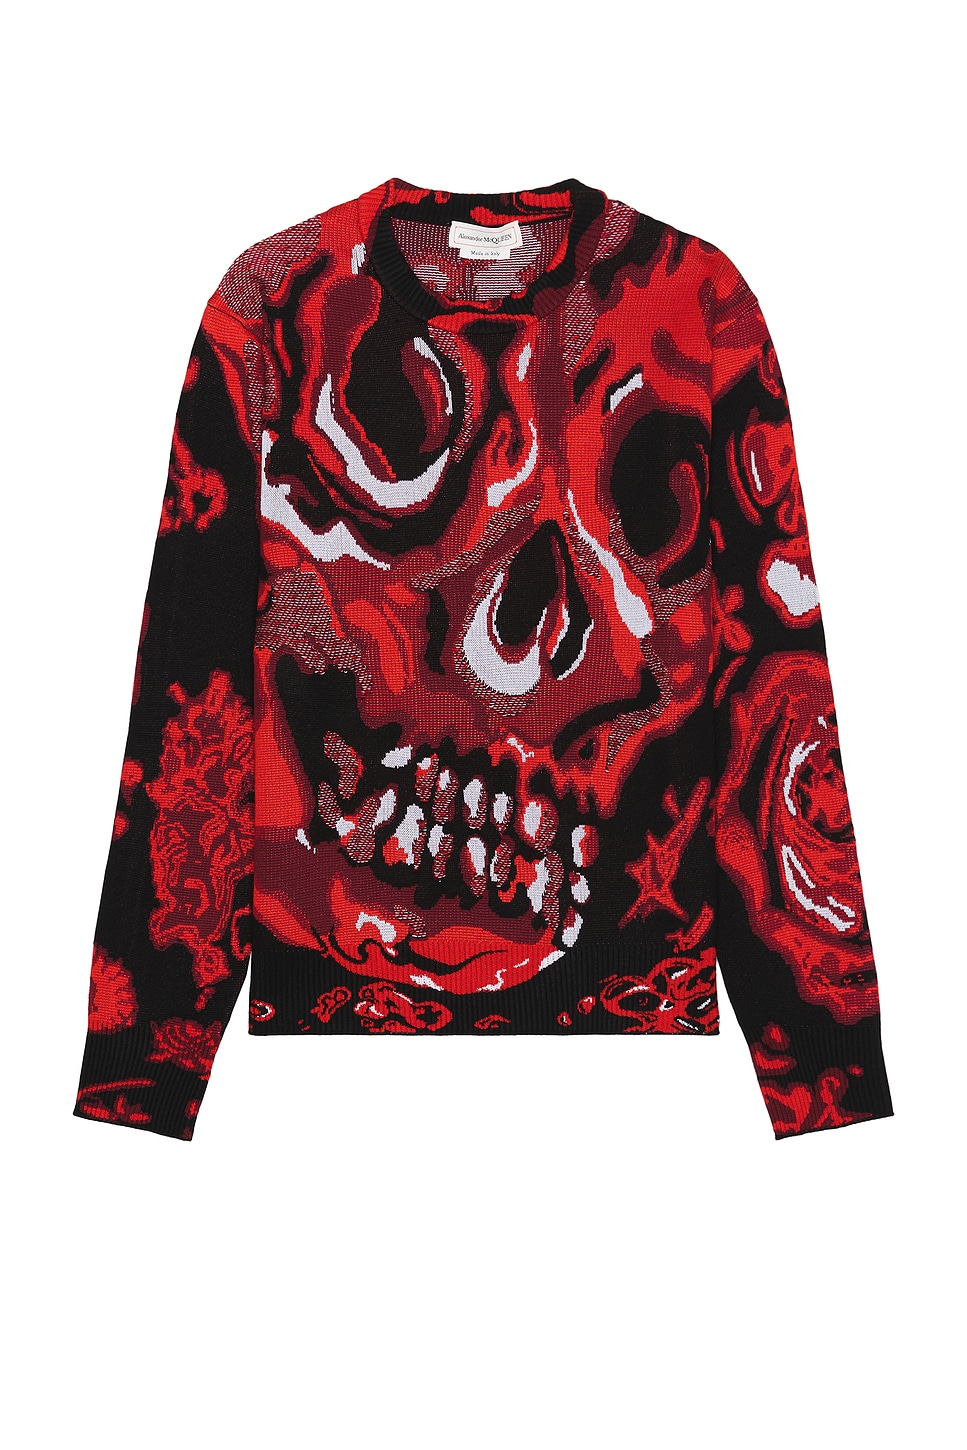 Image 1 of Alexander McQueen Skull Sweater in Black & Lust Red